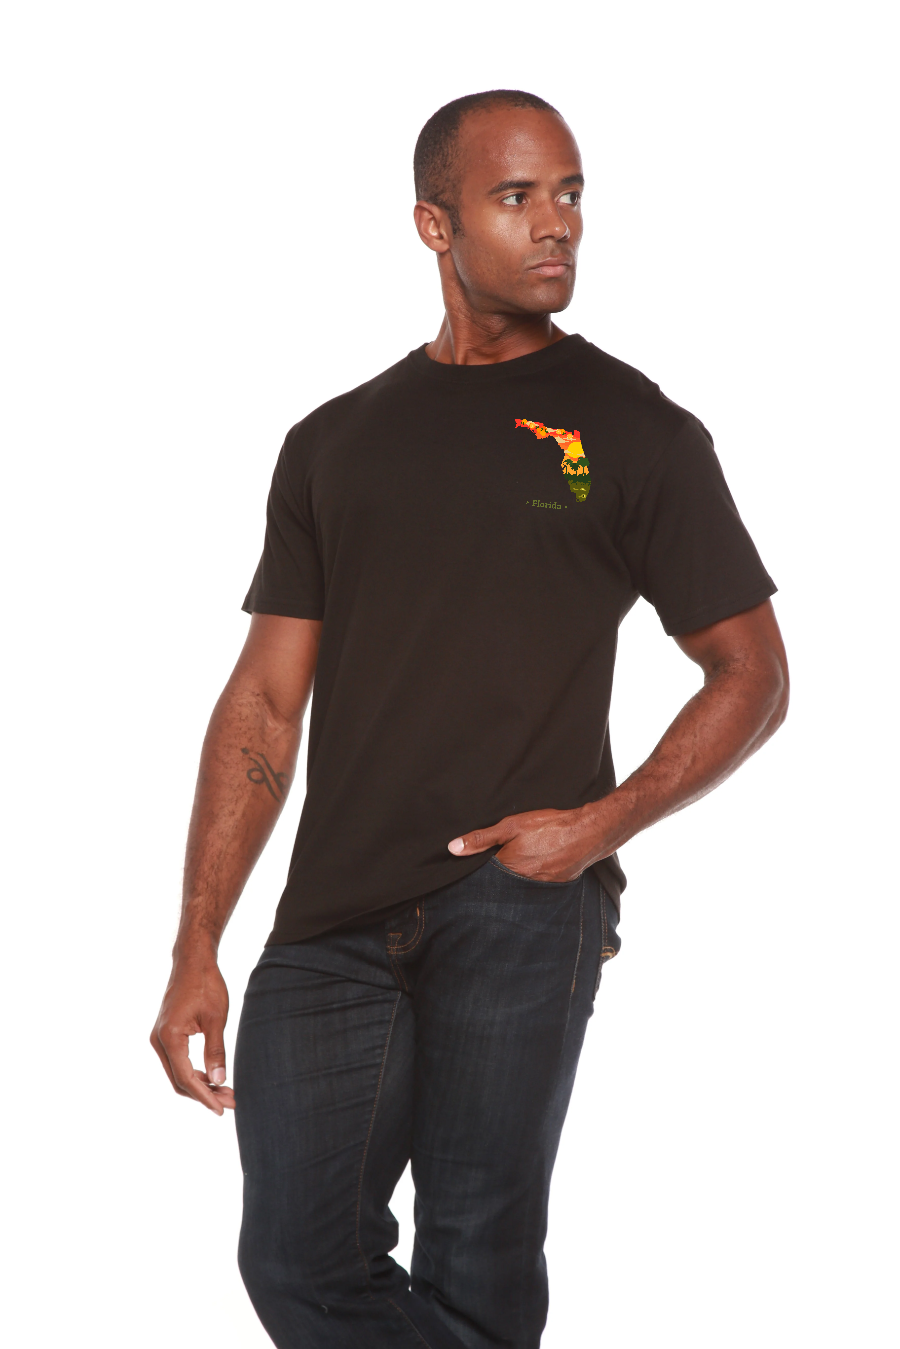 Florida Men's Bamboo Short Sleeve Graphic T-Shirt